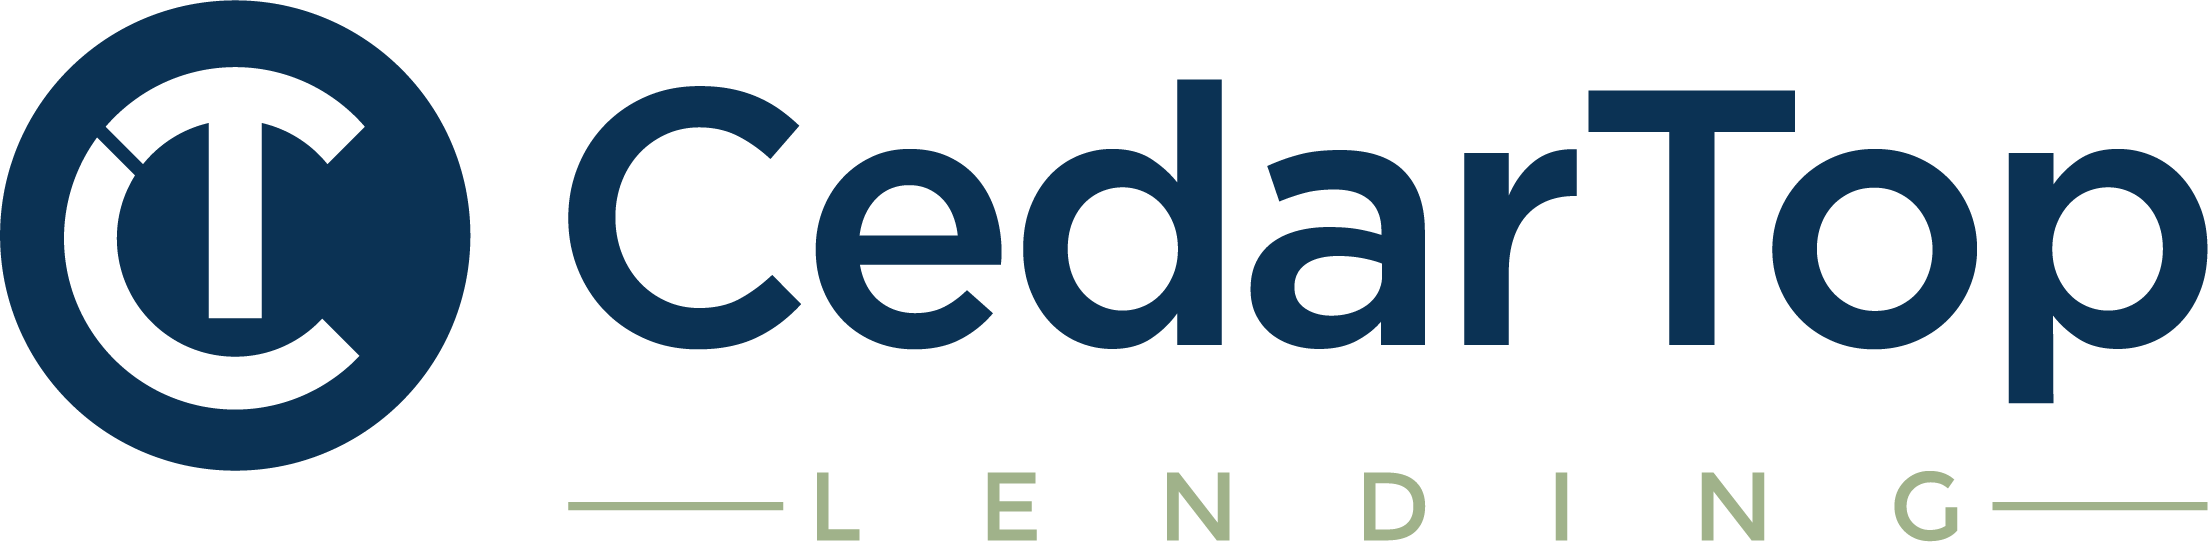 Cedar Top Lending